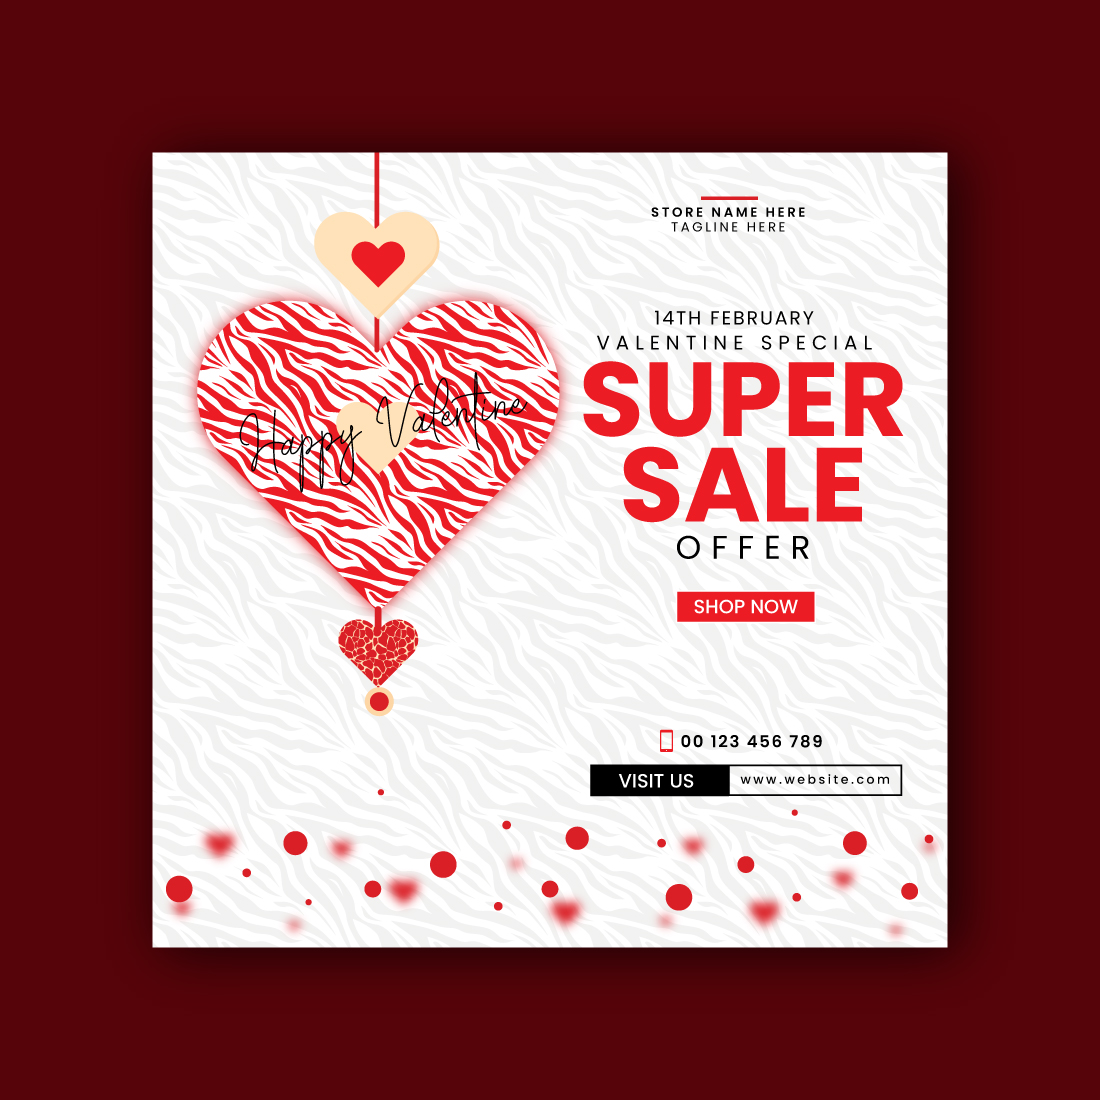 Valentine Super Sale Social media post cover image.